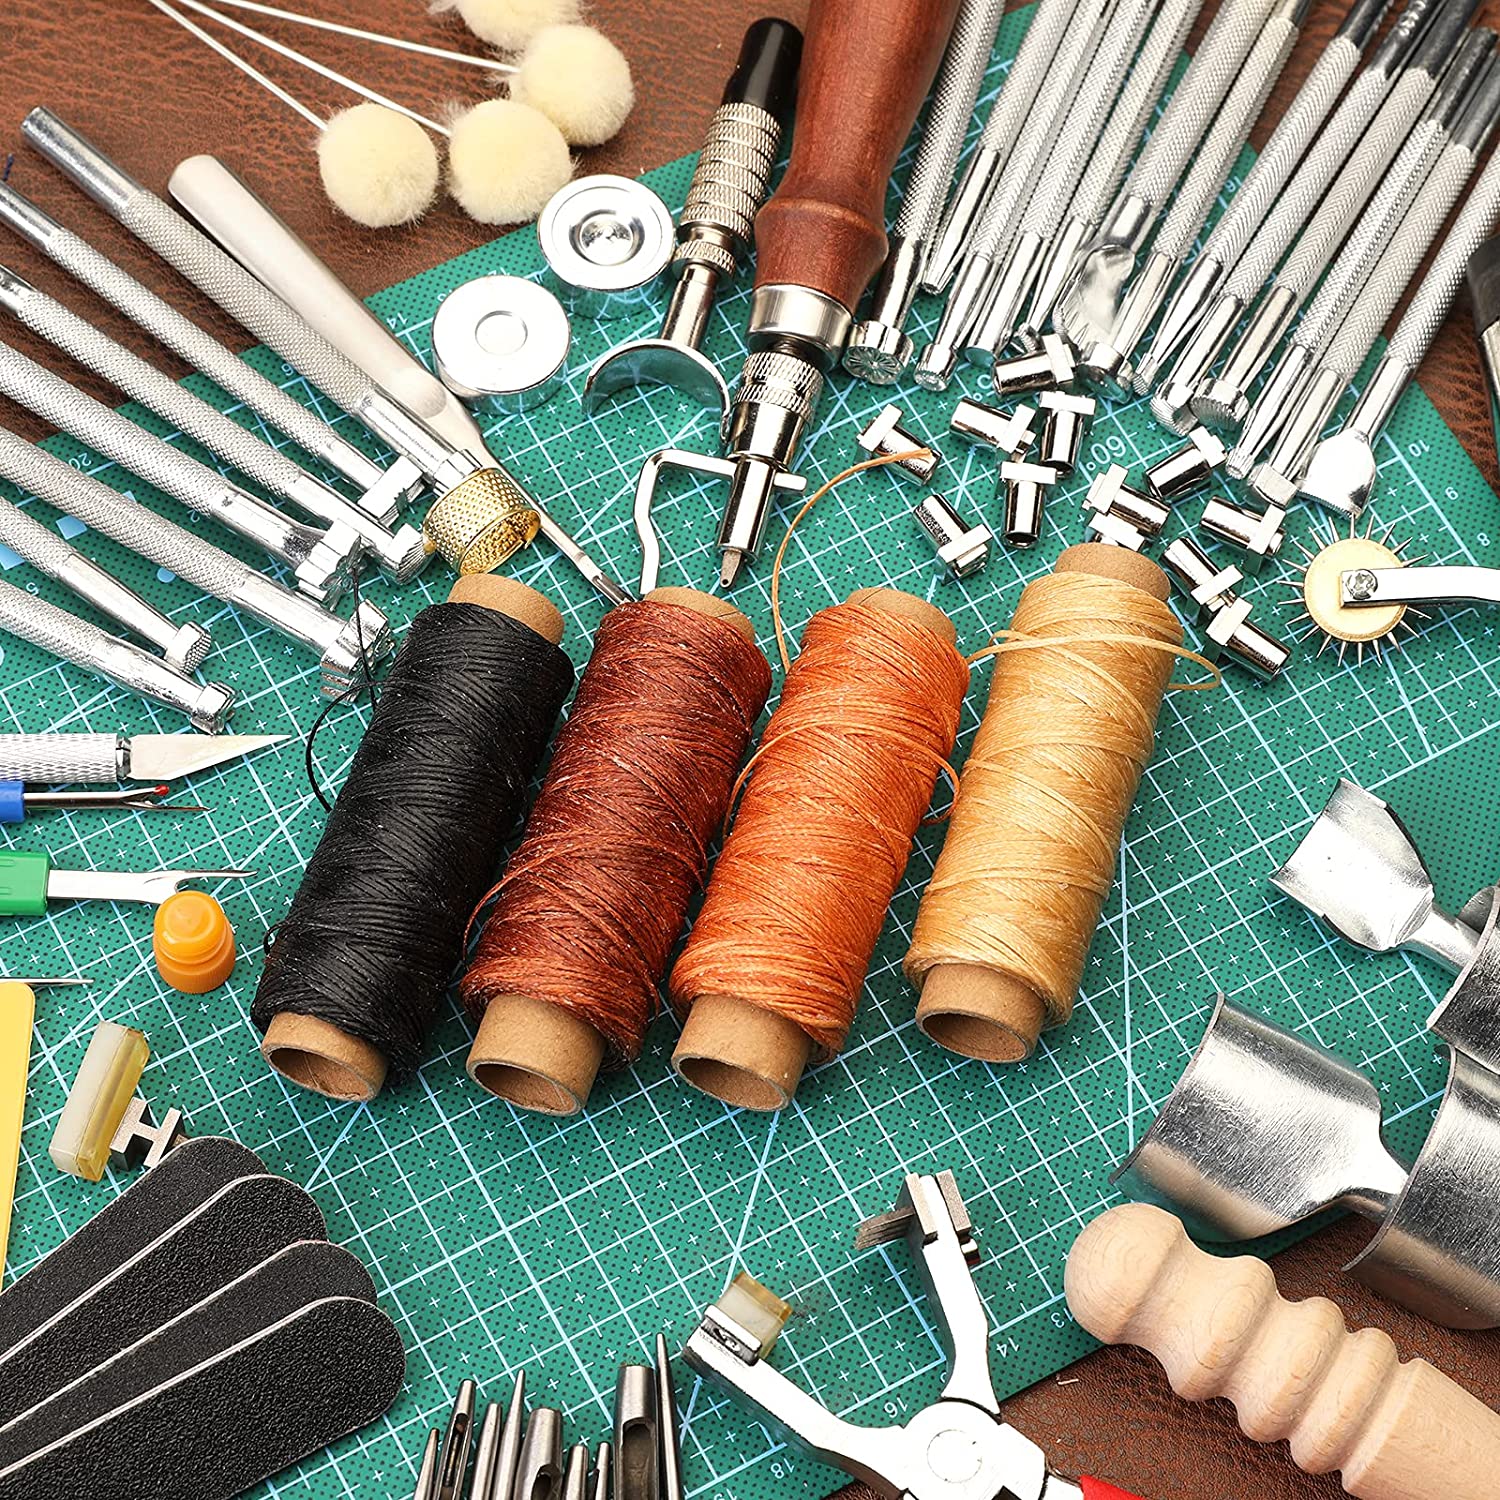  Leather Sewing Kit, 60 pcs Leather Stitching Kit